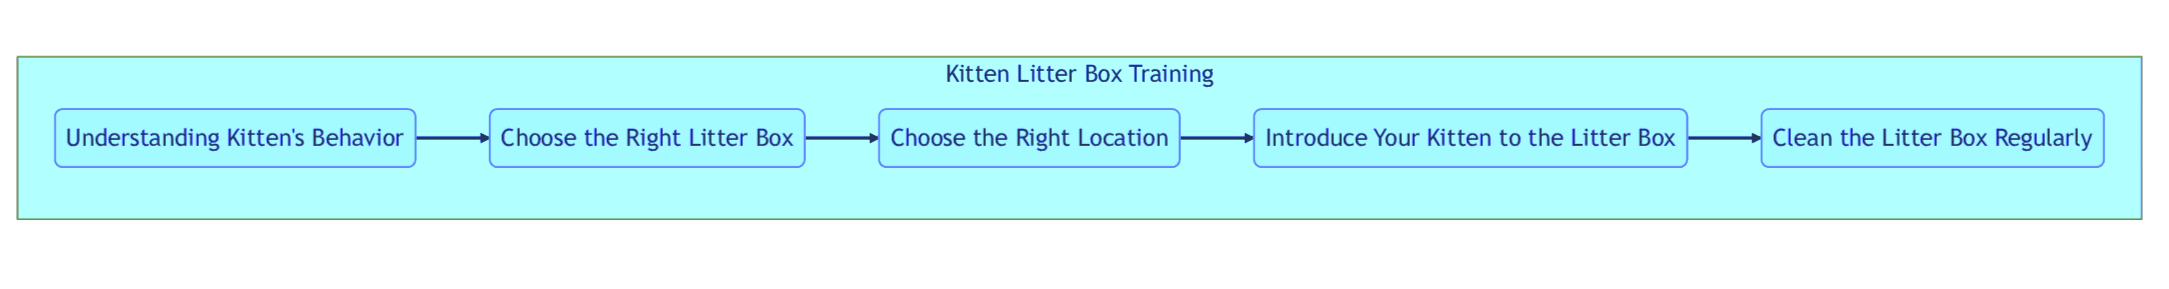 Kitten Litter Box Training